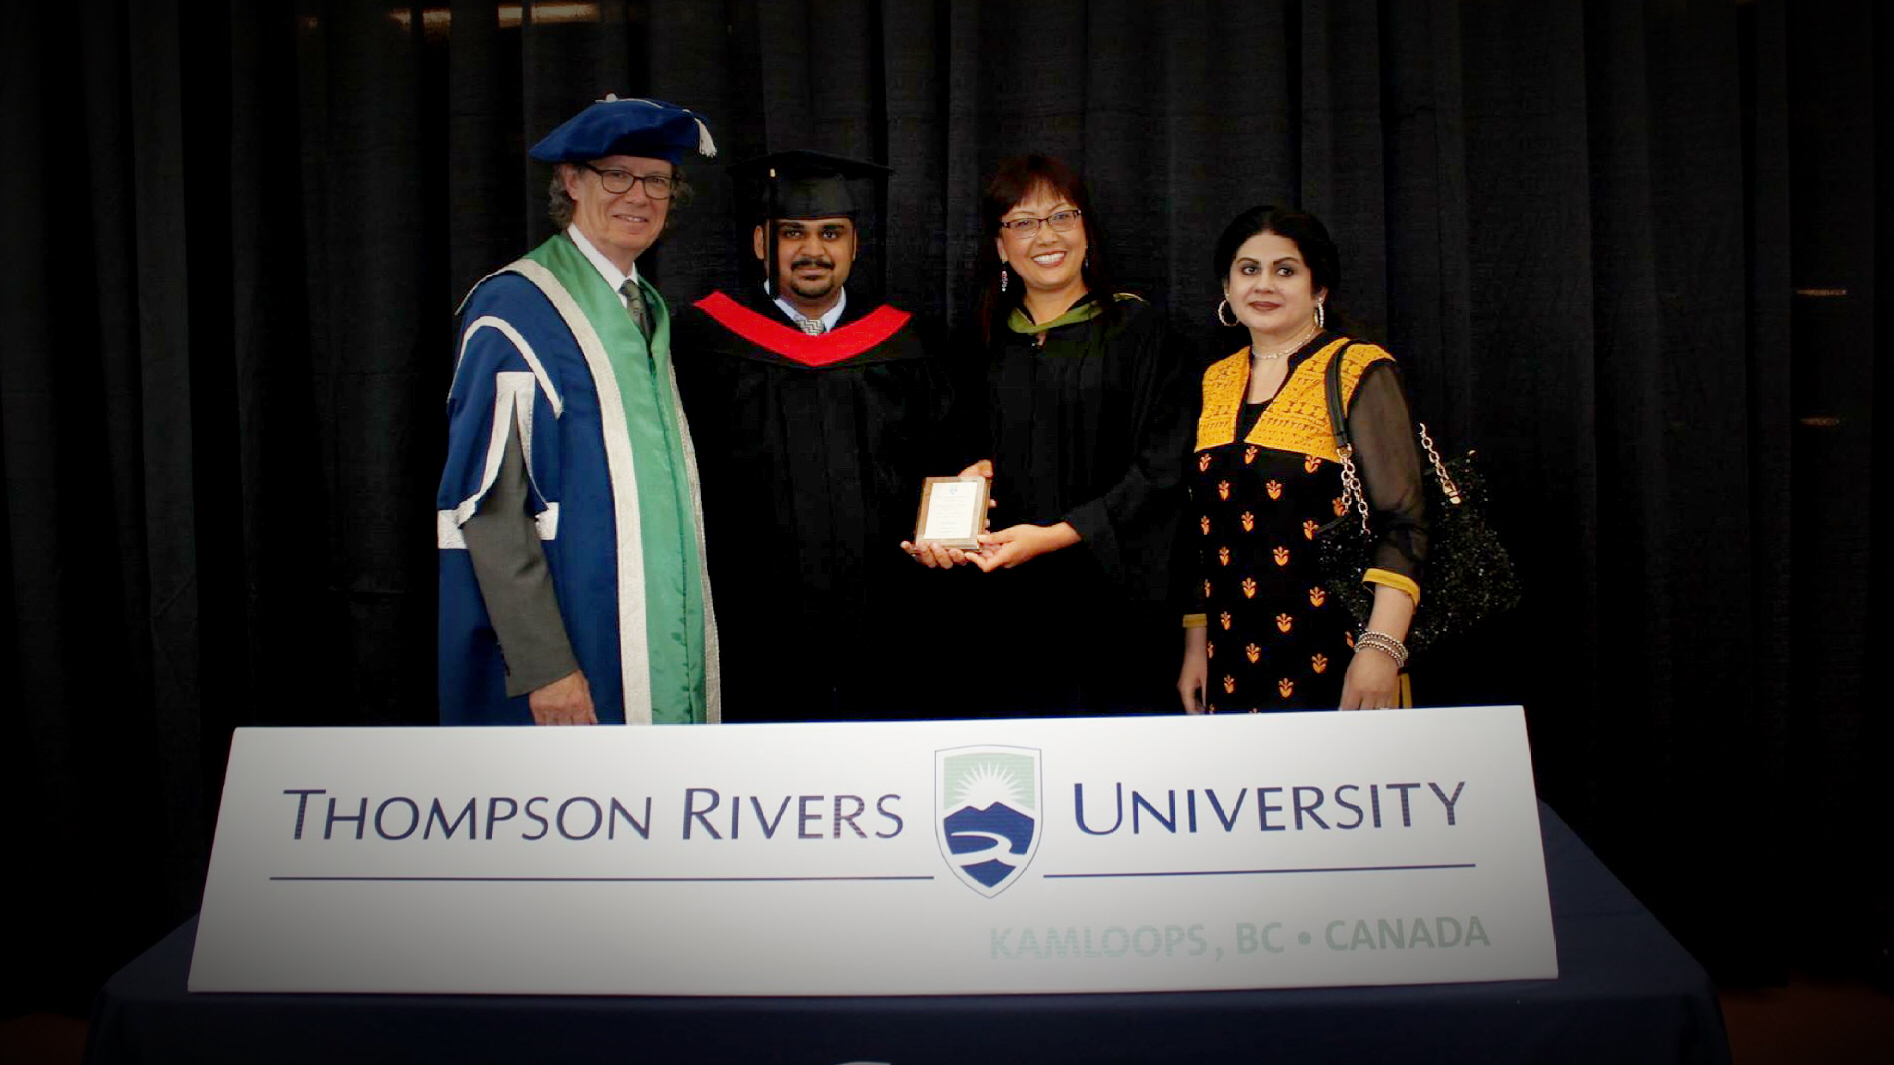 Thompson Rivers University, Kamloops